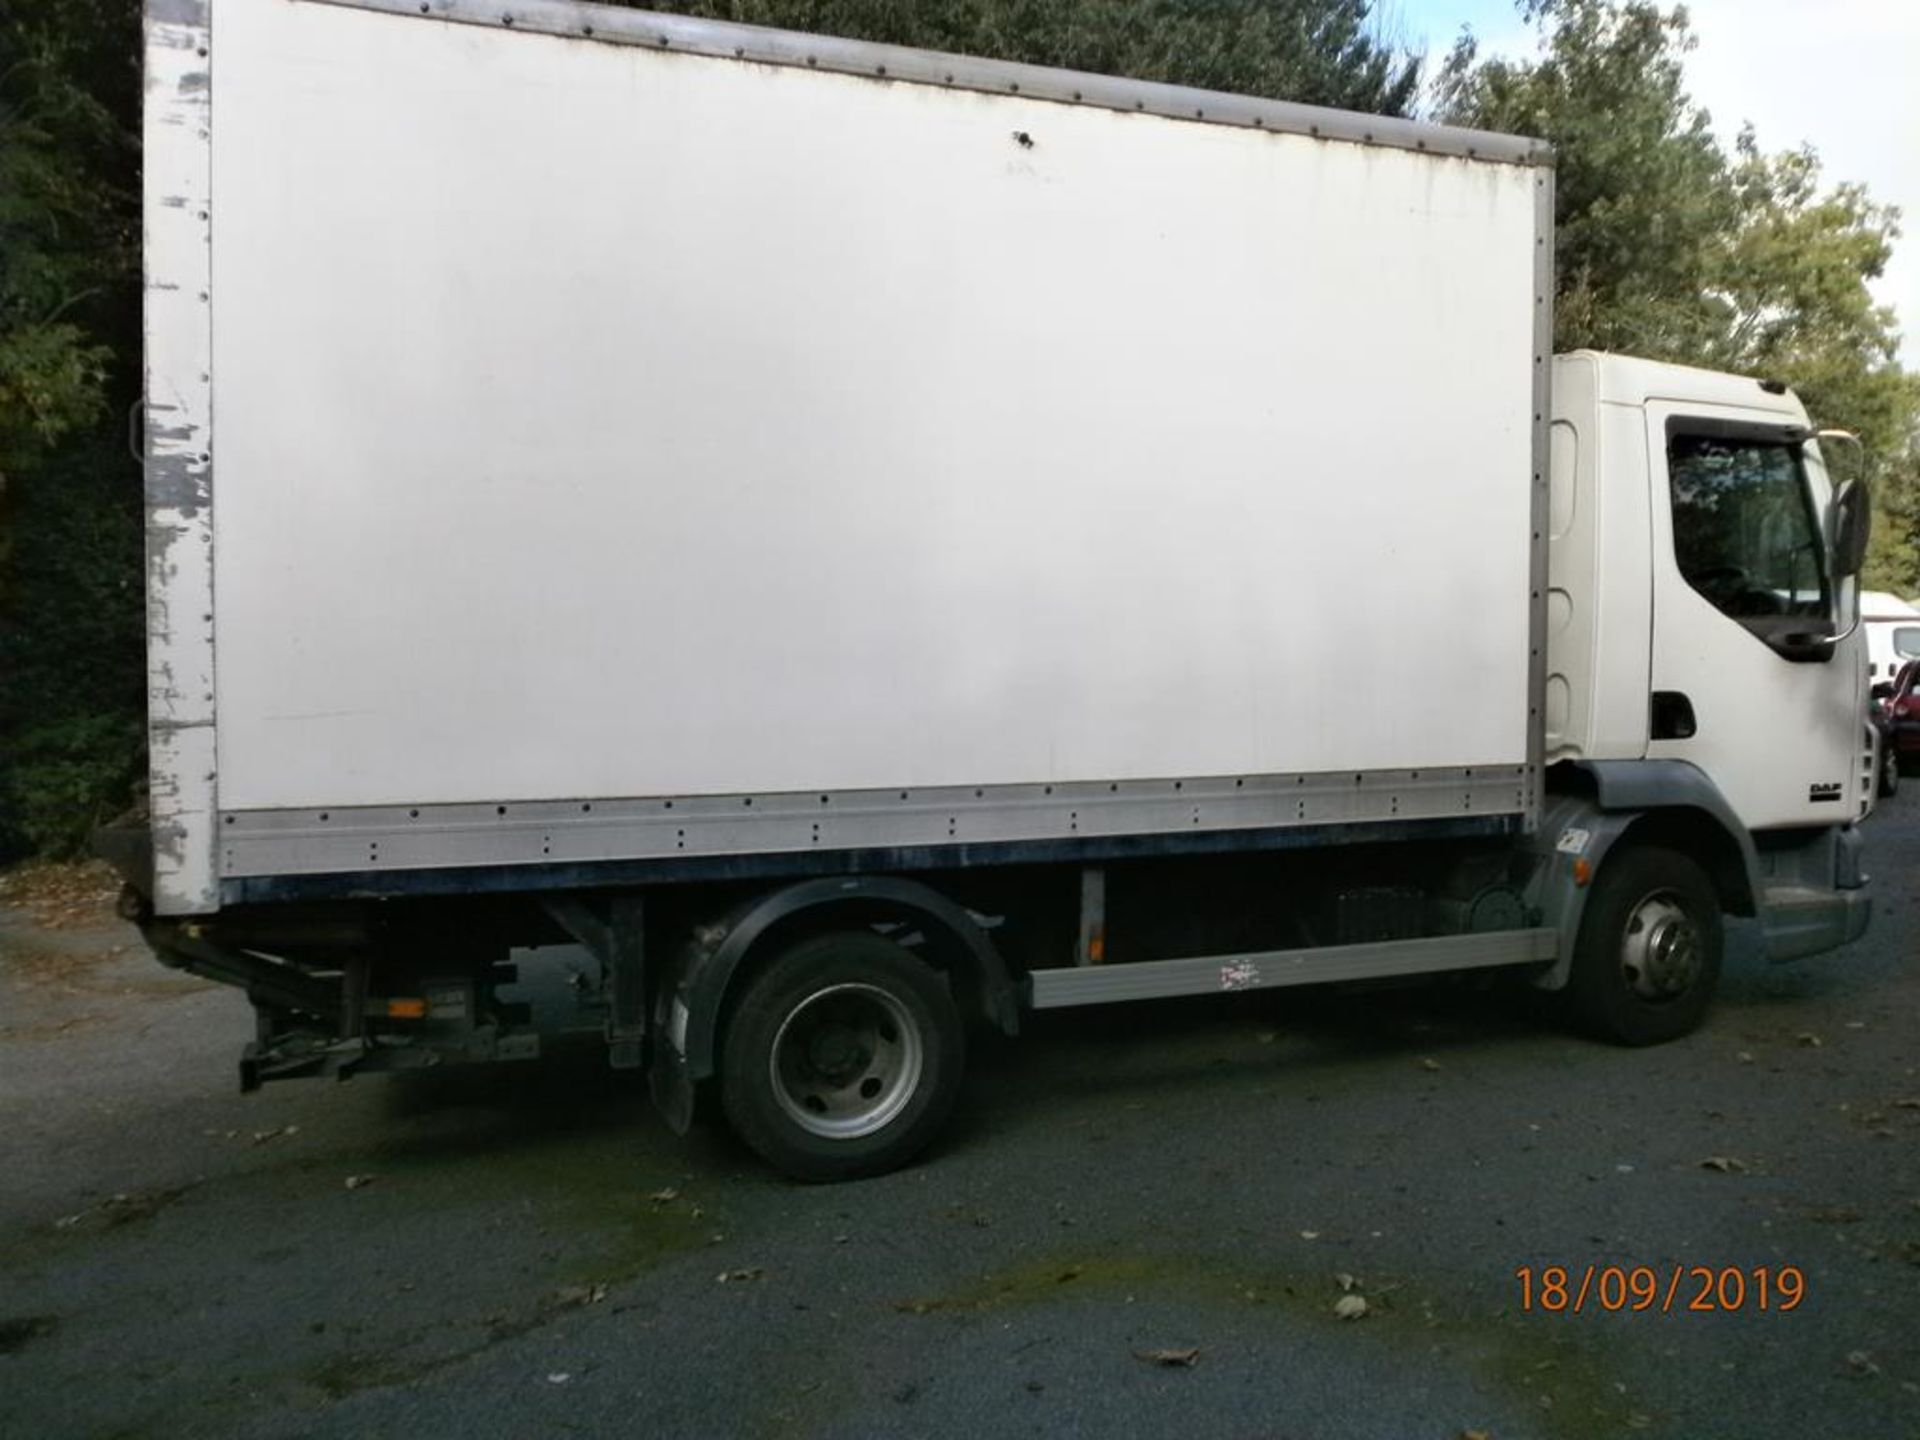 DAF LF 45.150 7.5T Box Lorry - Image 2 of 5